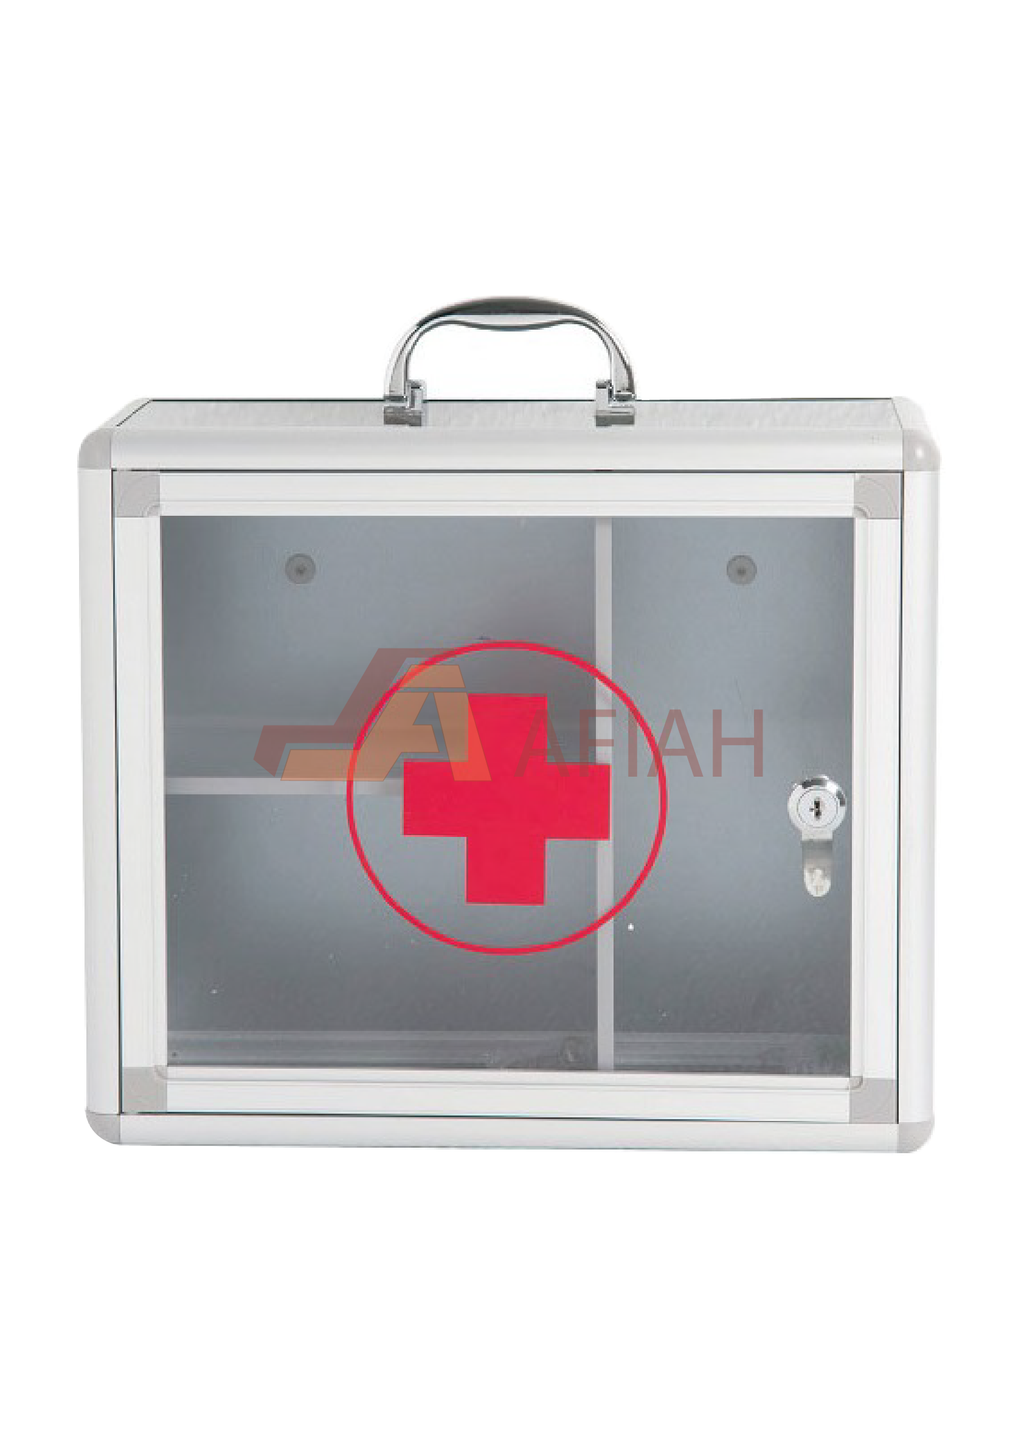 Donation Box, First Aid Box, Suggestion Box - Afia Manufacturing Sdn Bhd, Afiah Trading Company